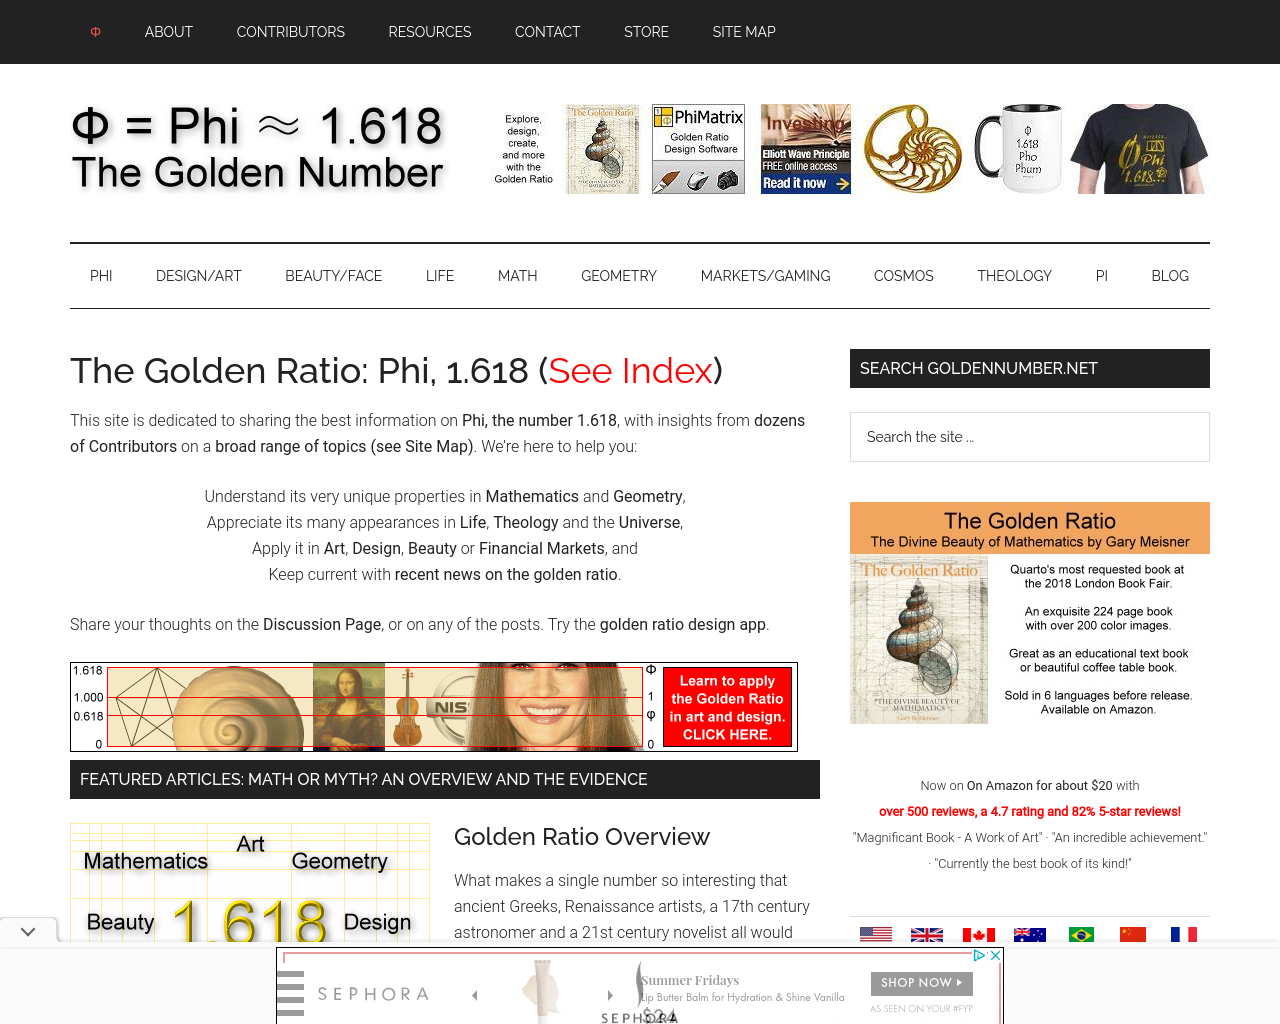 goldennumber.net